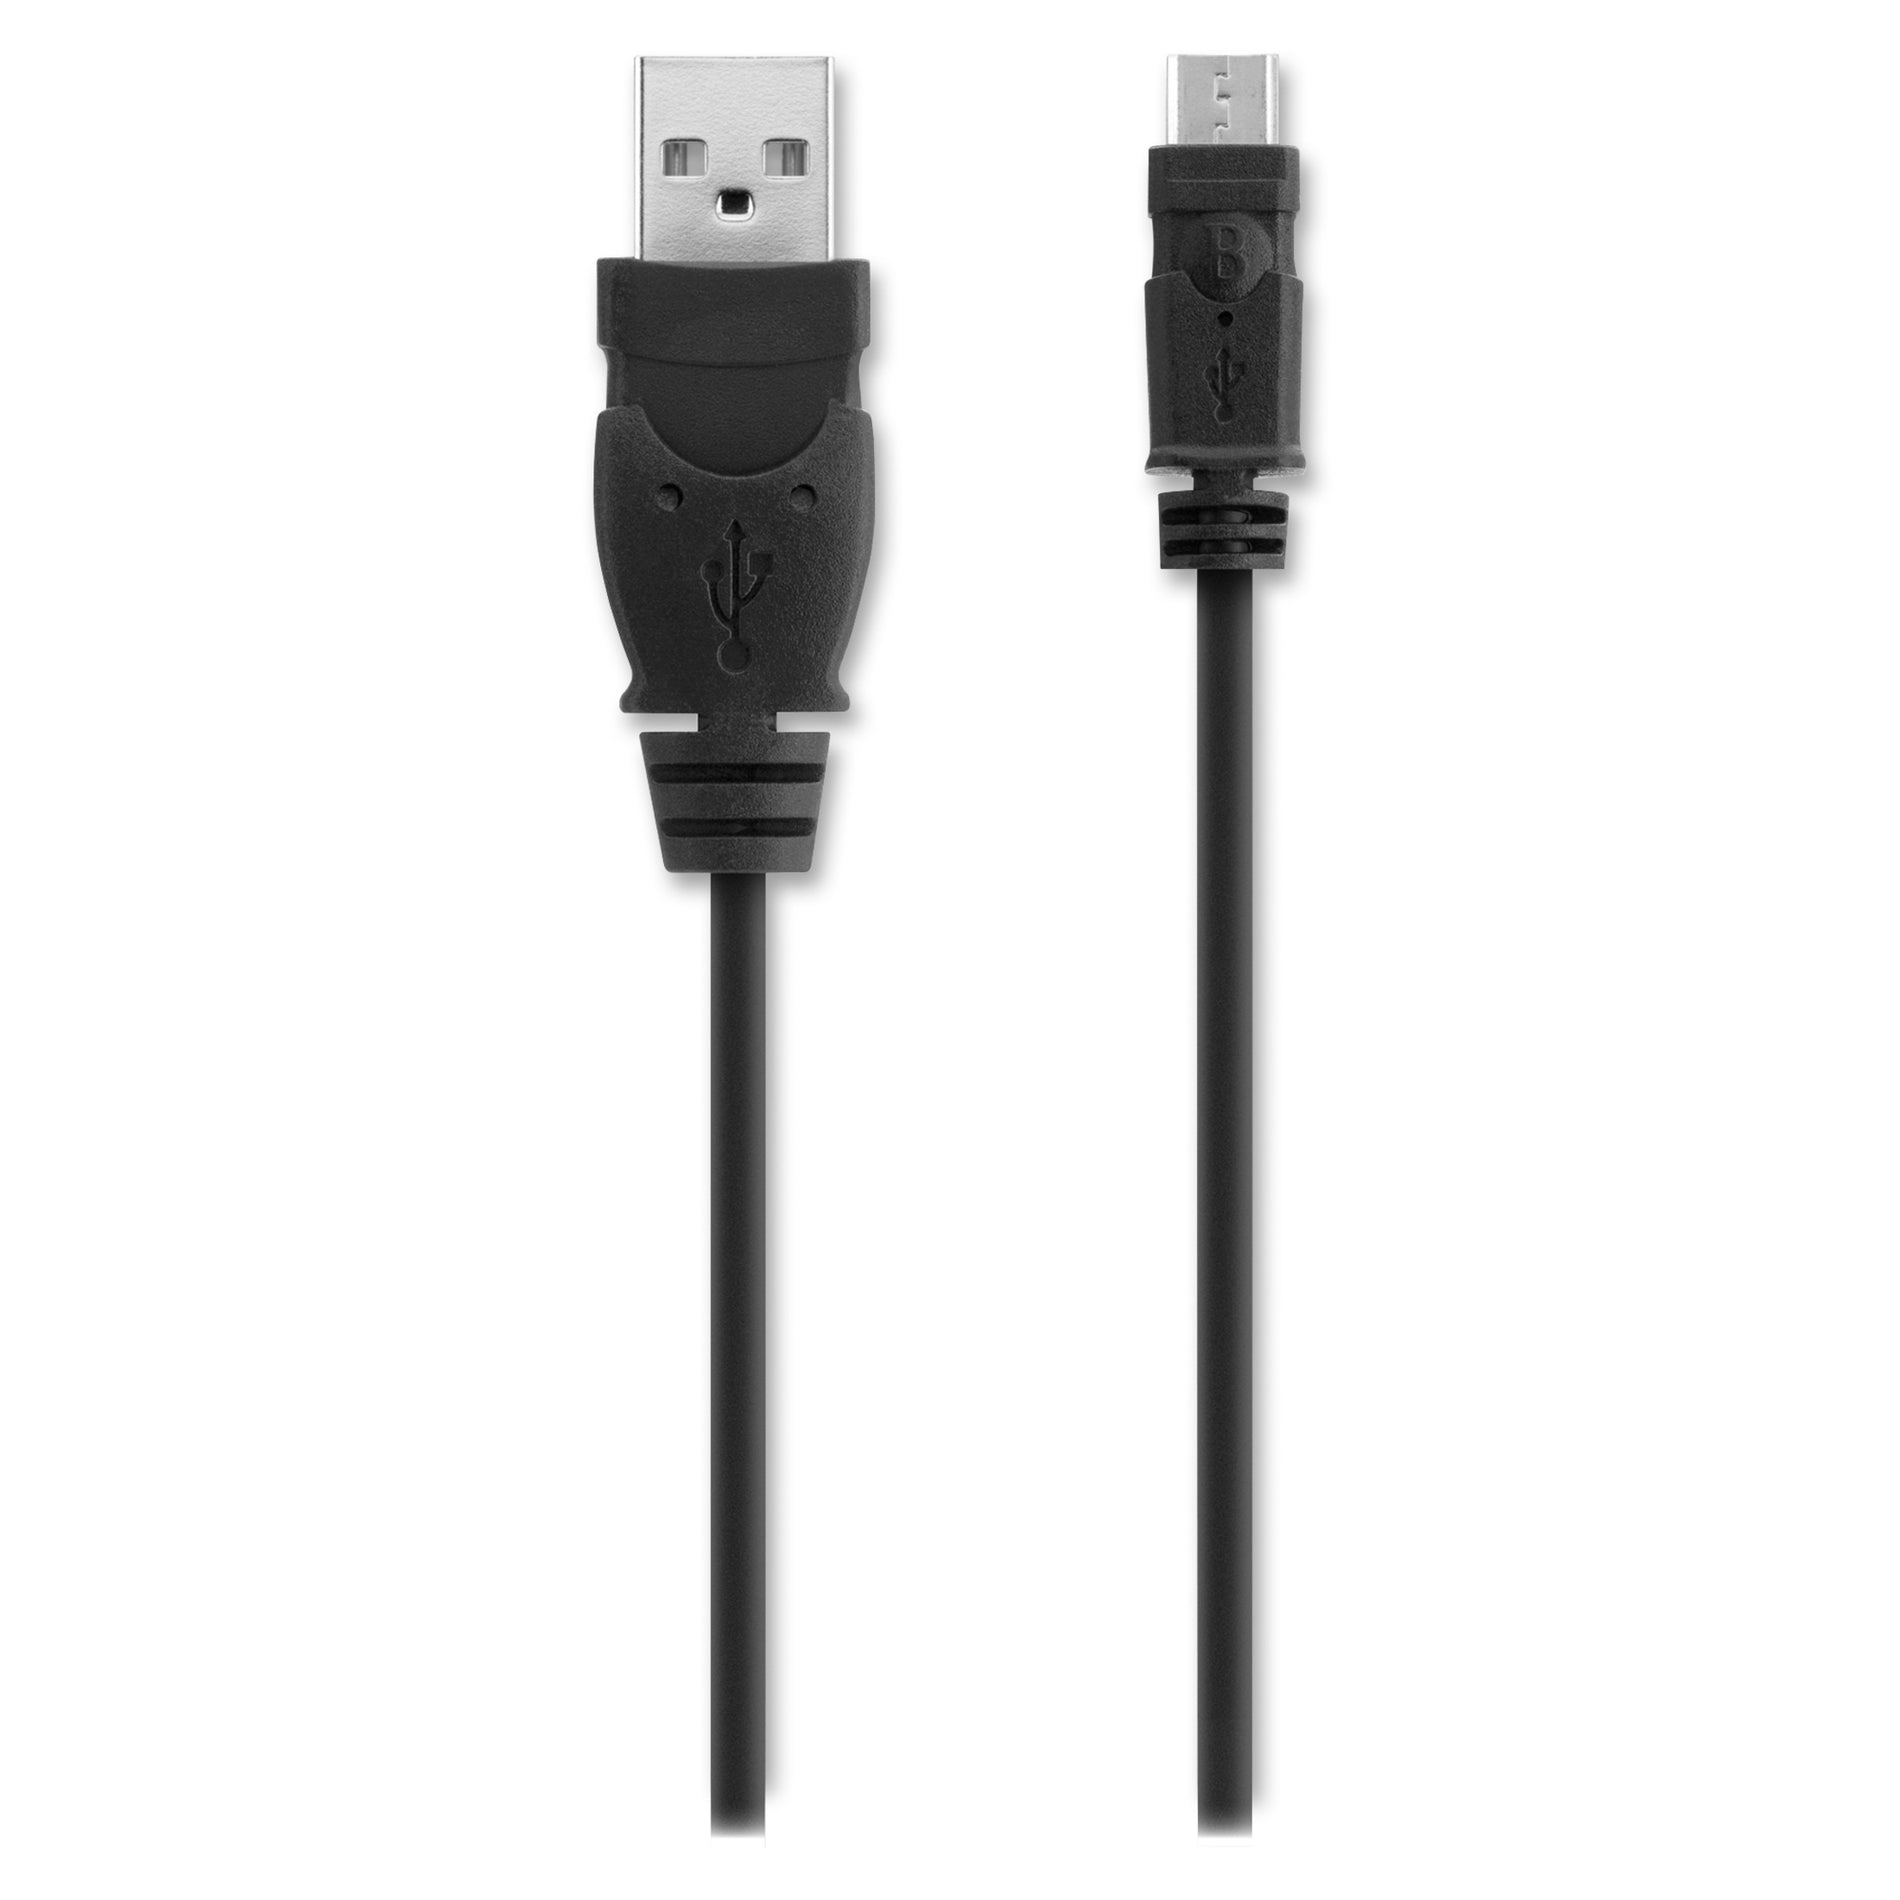 Belkin F3U151B06 Micro-USB Charging Cable, 6ft, Black